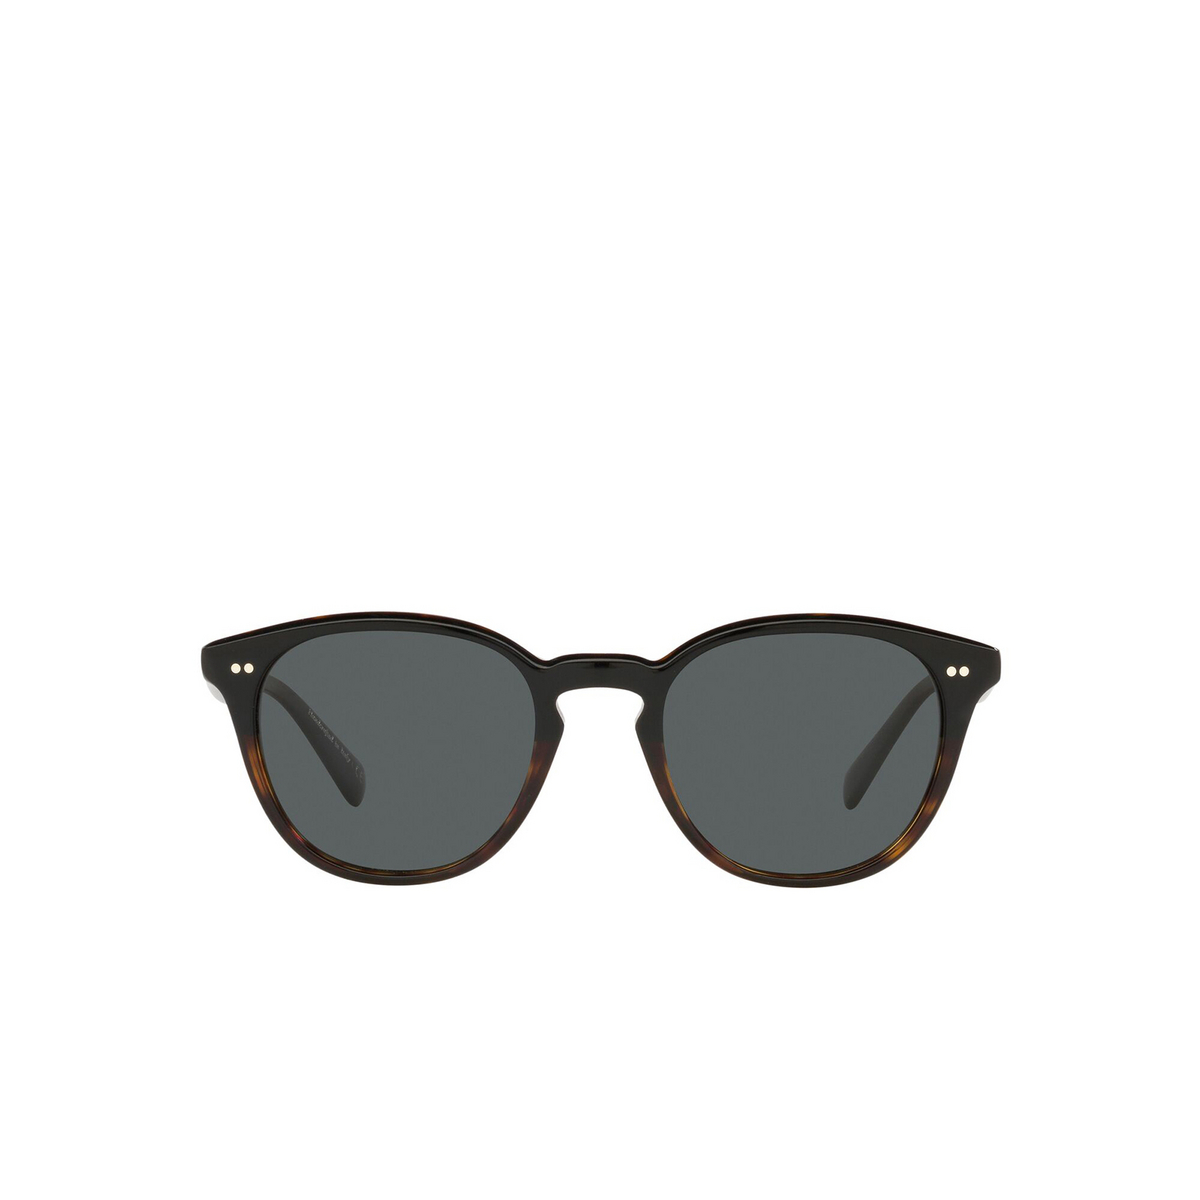 Oliver Peoples® Square Sunglasses: Desmon Sun OV5454SU color Black / 362 Gradient 1722P2 - front view.